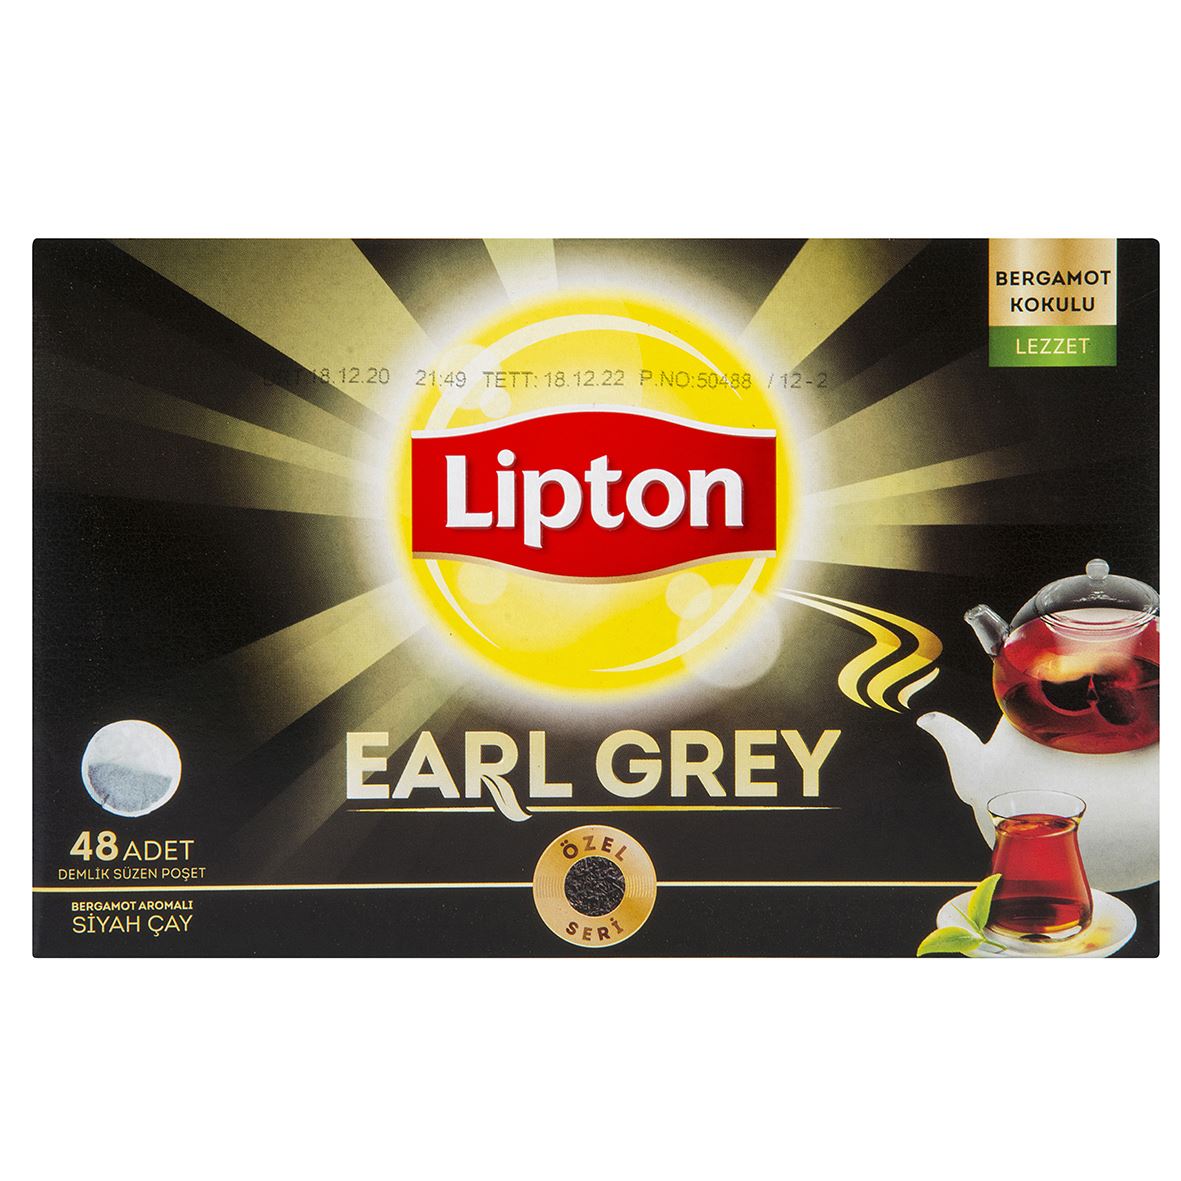 Lipton Earl Grey Demlik Poşet Çay 48'Lı 153 G